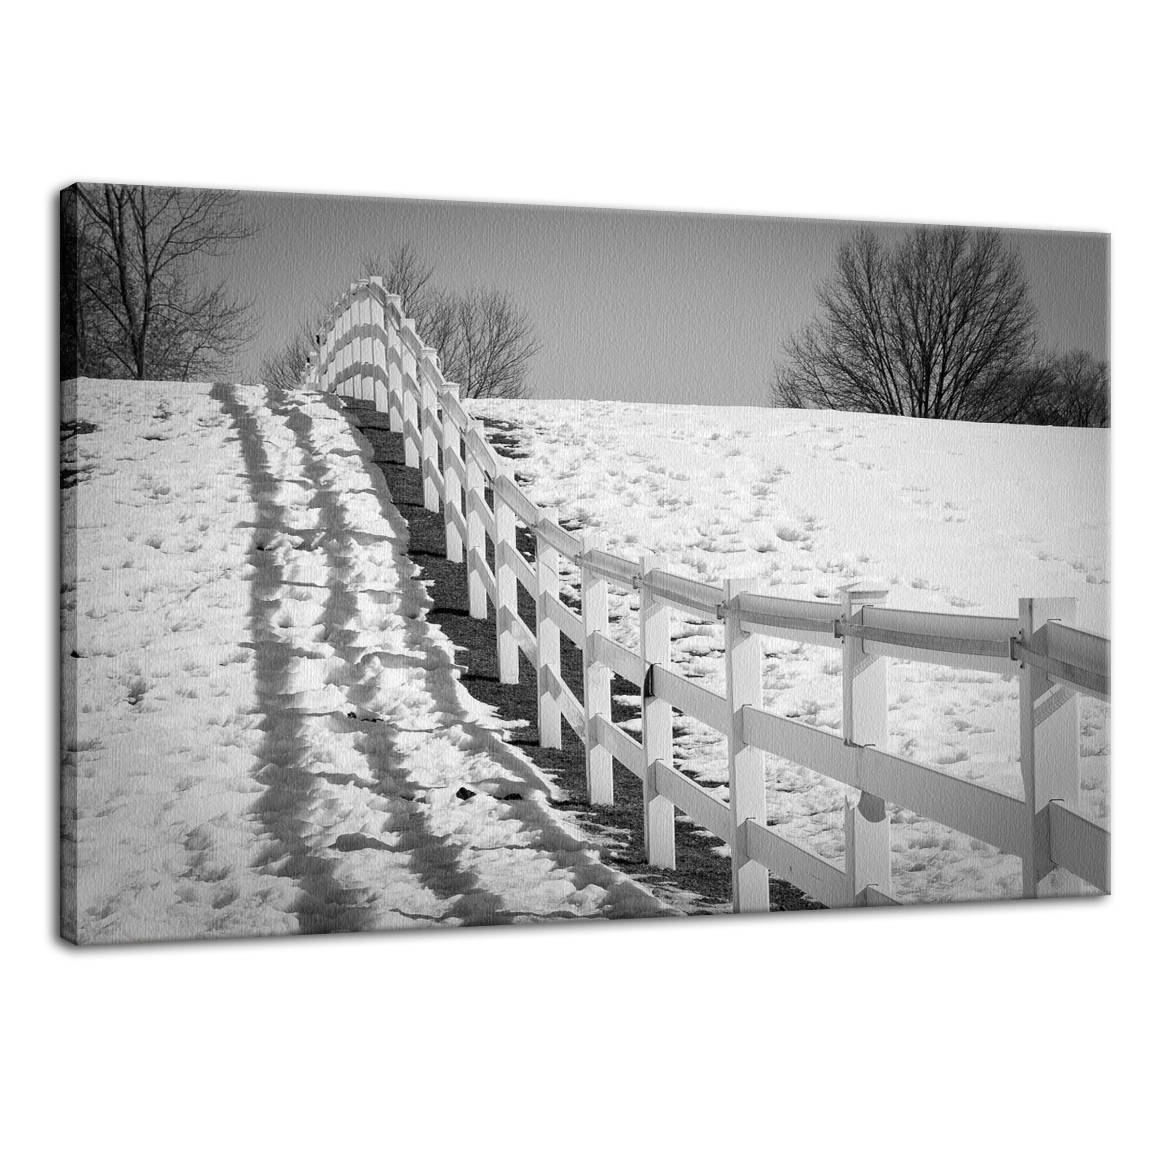 Endless Fences in Black & White Rural Landscape Fine Art Canvas Wall Art Prints  - PIPAFINEART